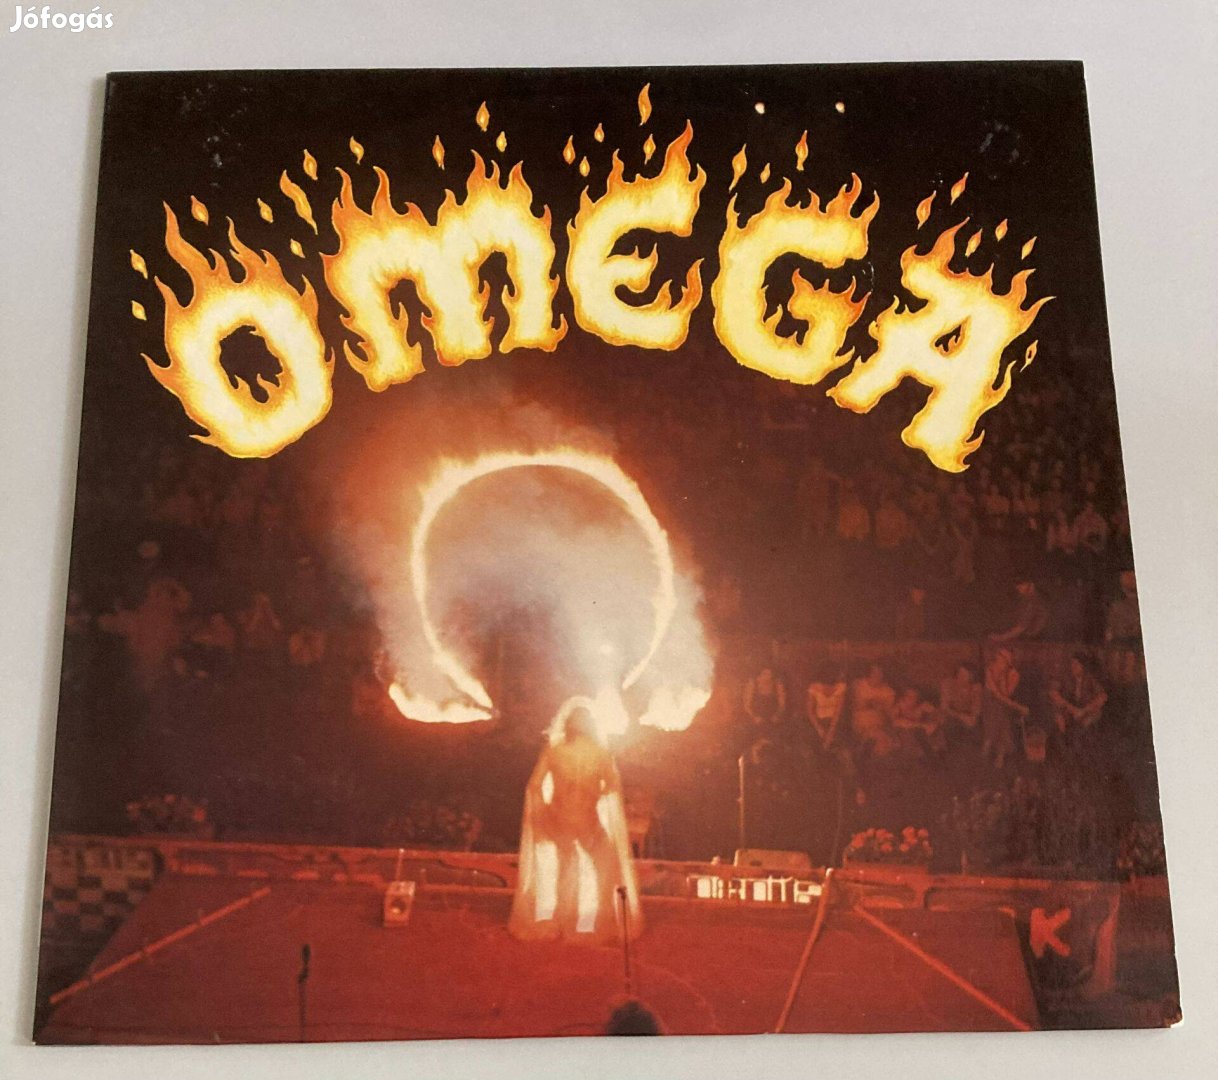 Omega - Omega III (Made in Germany, BLPS 19191Q, 1974)